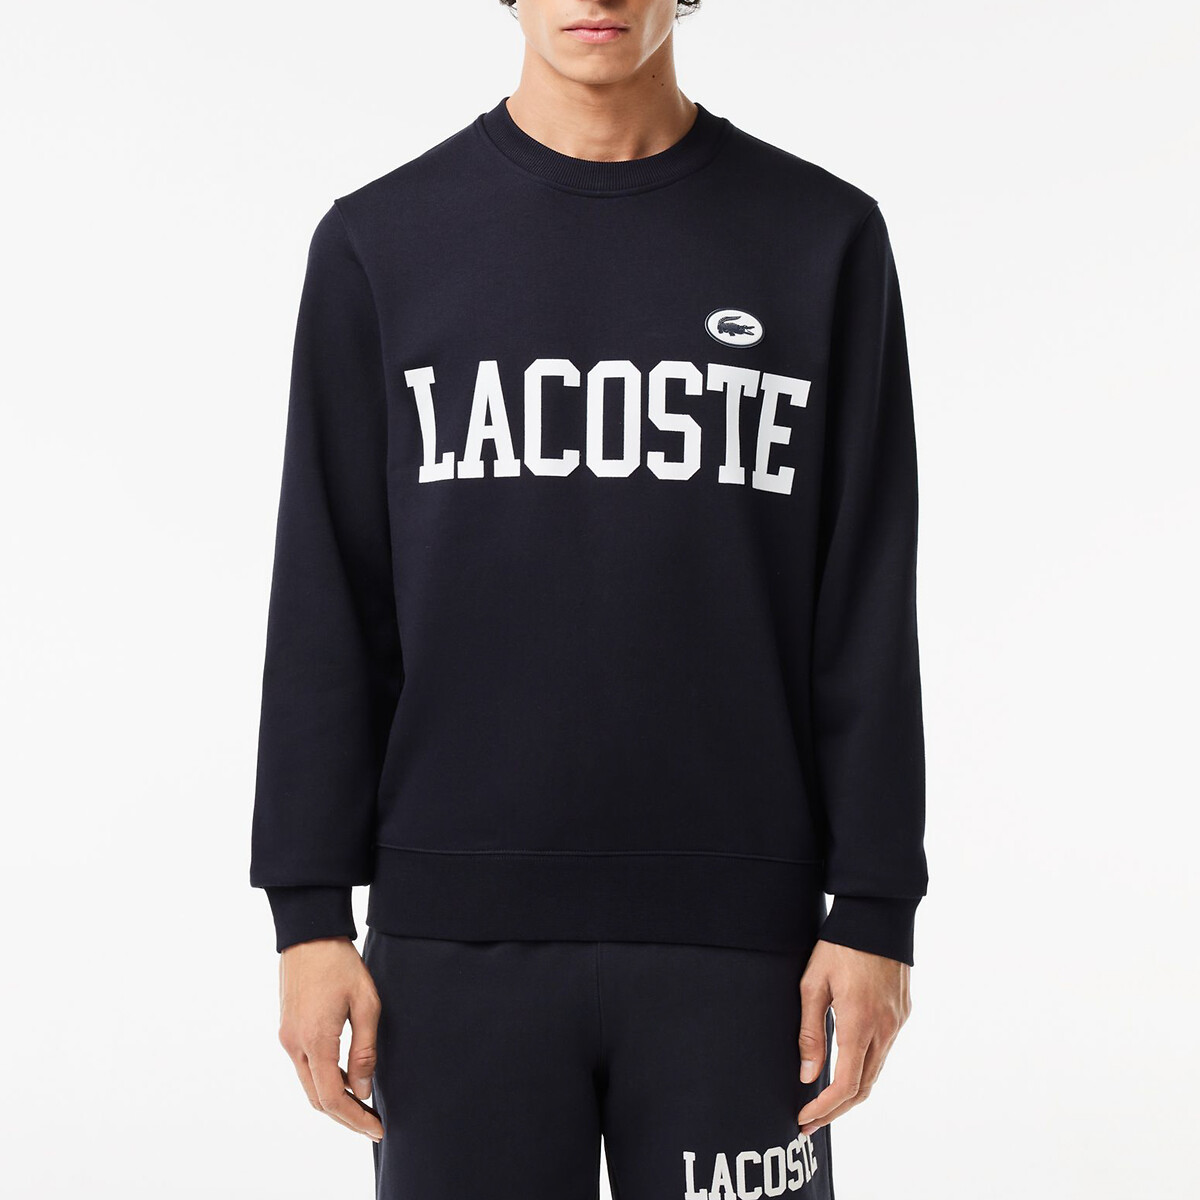 Lacoste Sweatshirt Jogging Sweatshirt mit großem Markenprint